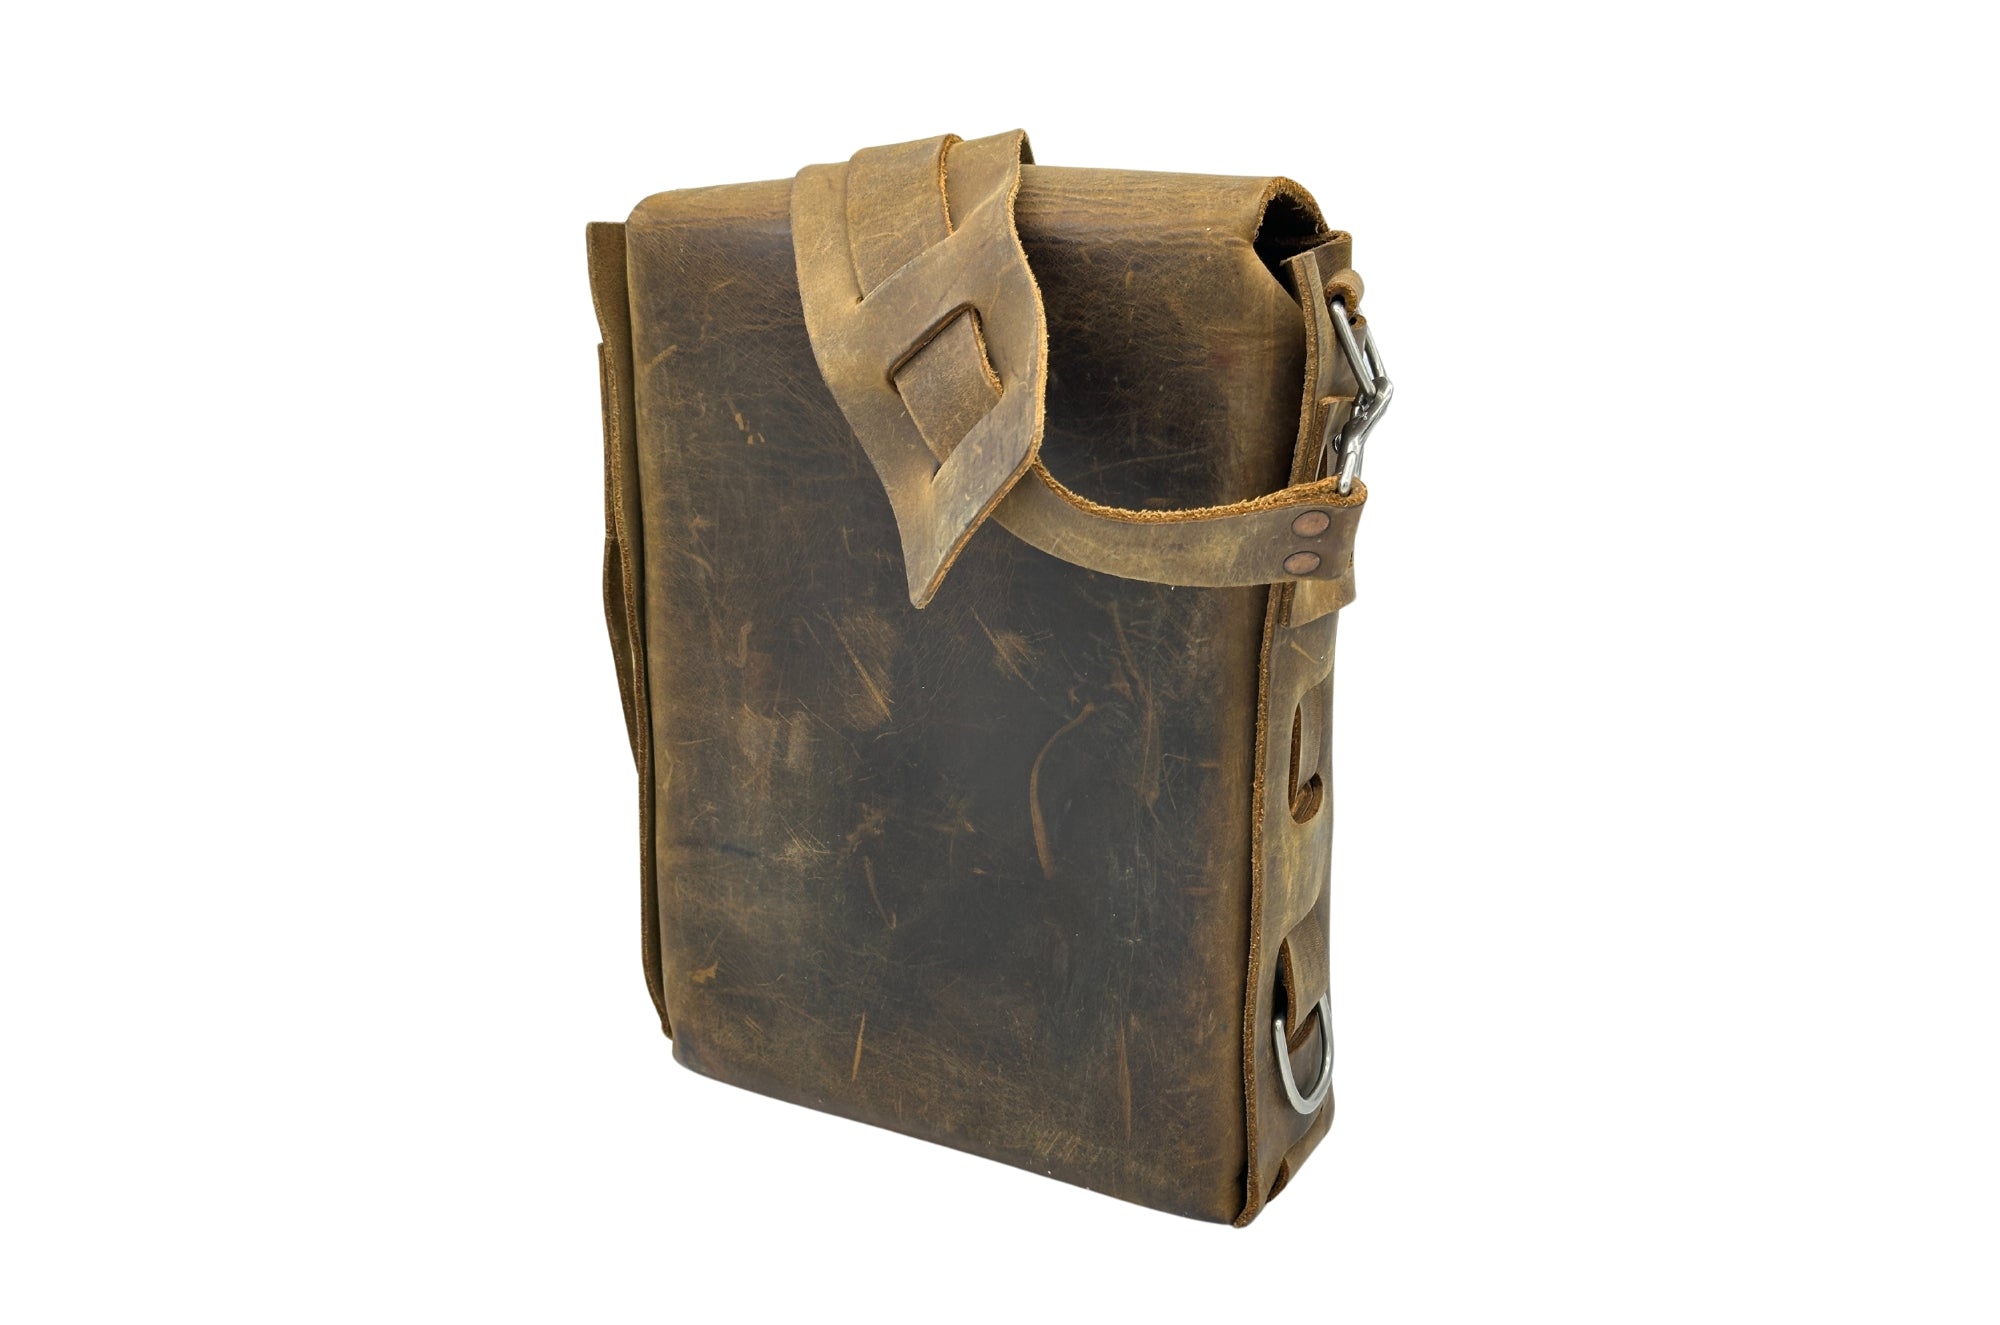 SEASONED No. 820 Classic Bag in Crazy Horse With Custom Closure and Rear Interior Pocket